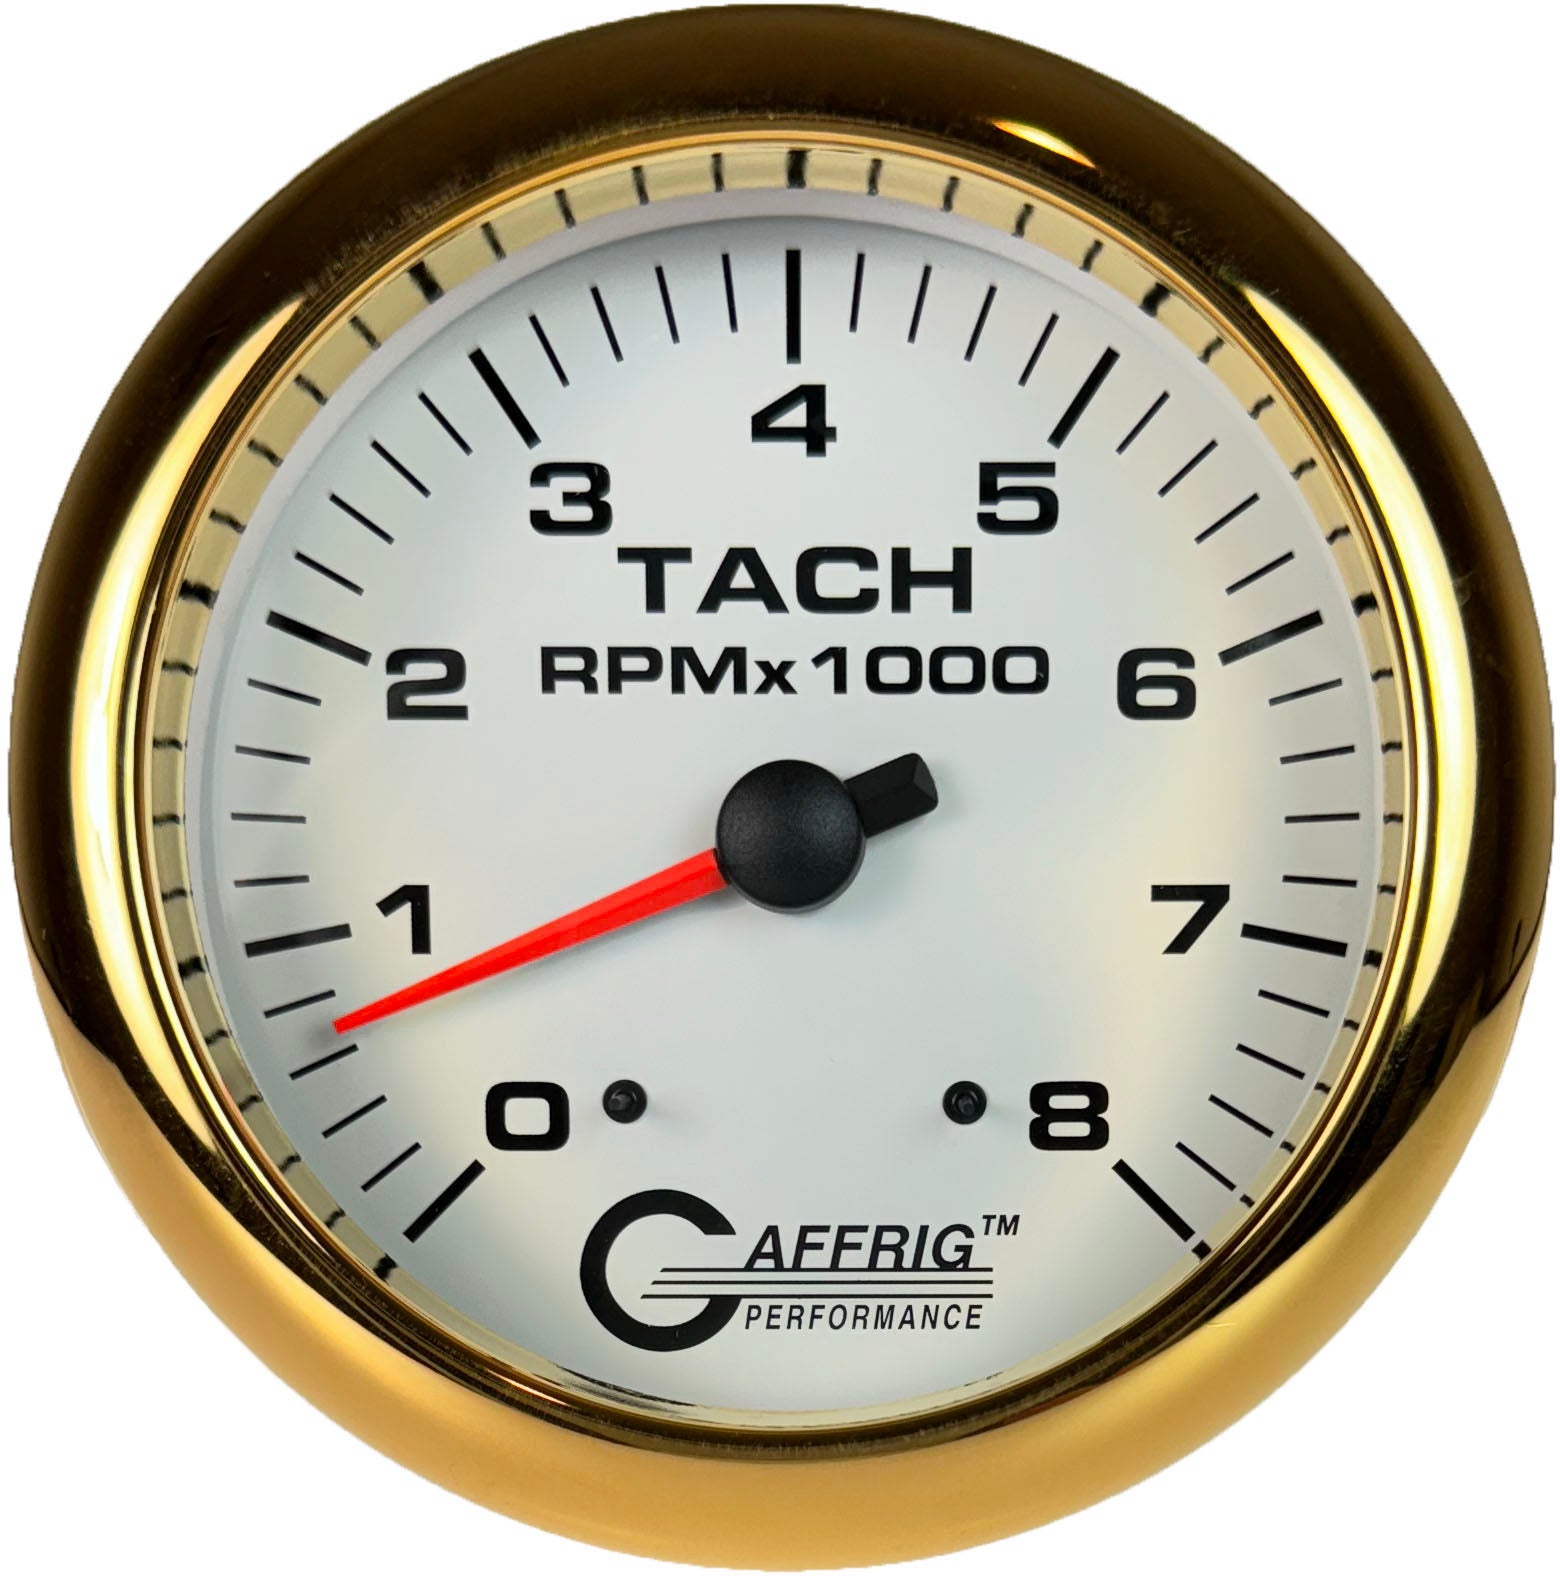 GAFFRIG PART #10019 4 5/8 INCH ELECTRIC TACHOMETER GAUGE 0-8000 RPM WHITE GOLD